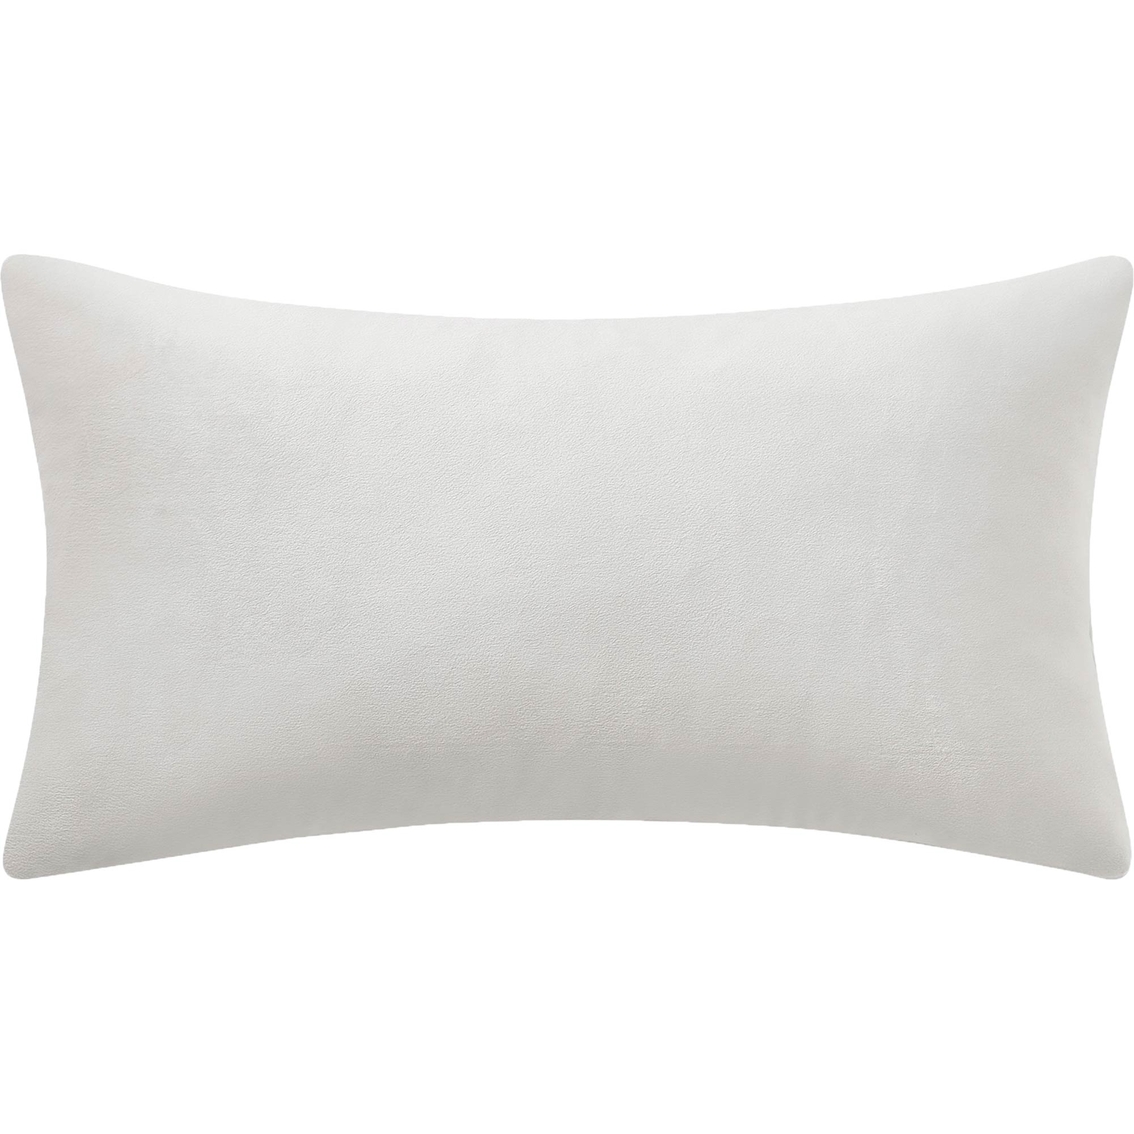 Waterford Maritana Decorative Pillows 3 pc. Set - Image 3 of 8